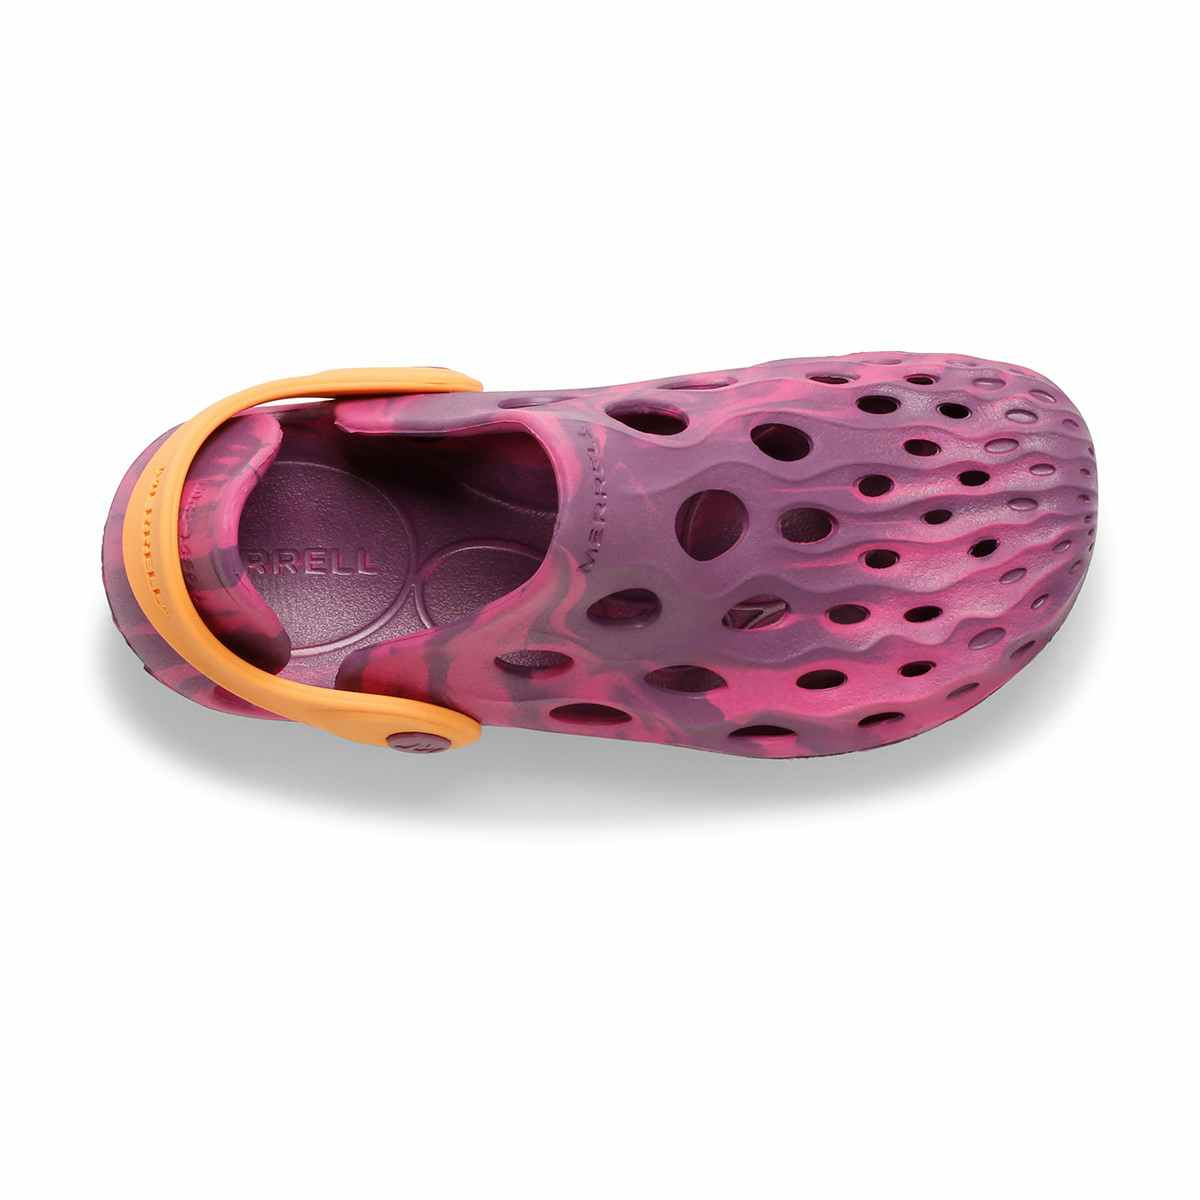 Hydro Moc Sandals Violet